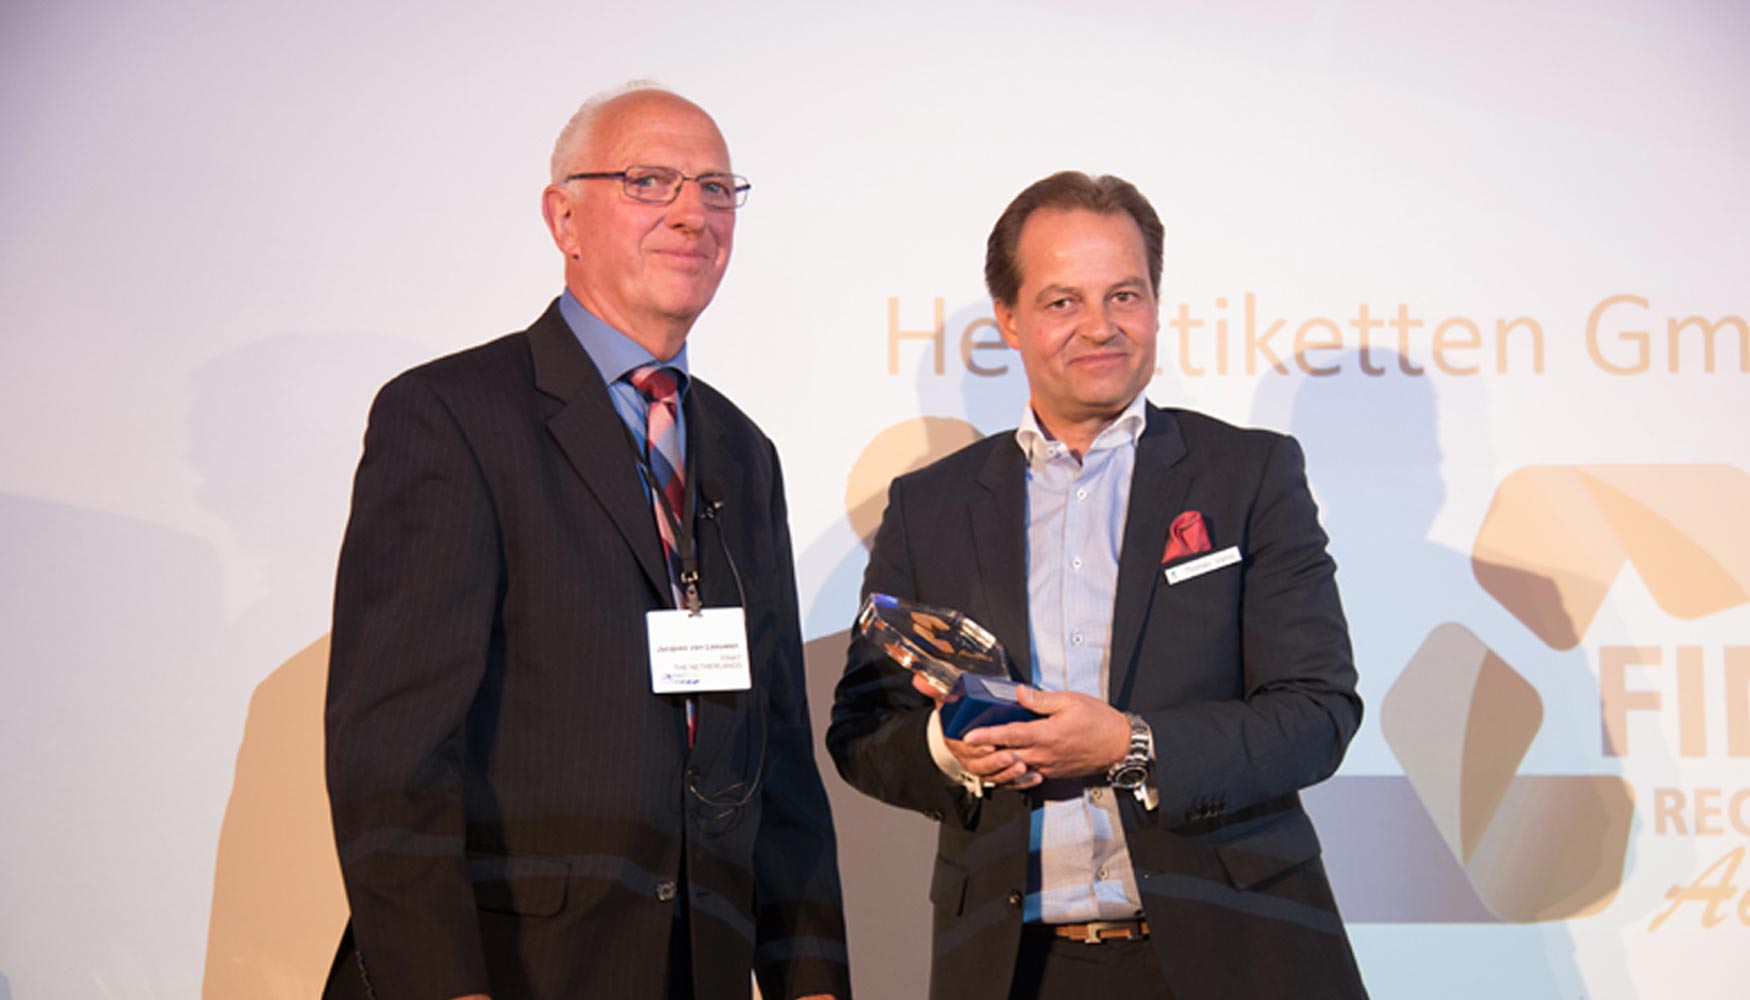 Entrega de premios a Helf Etiketten